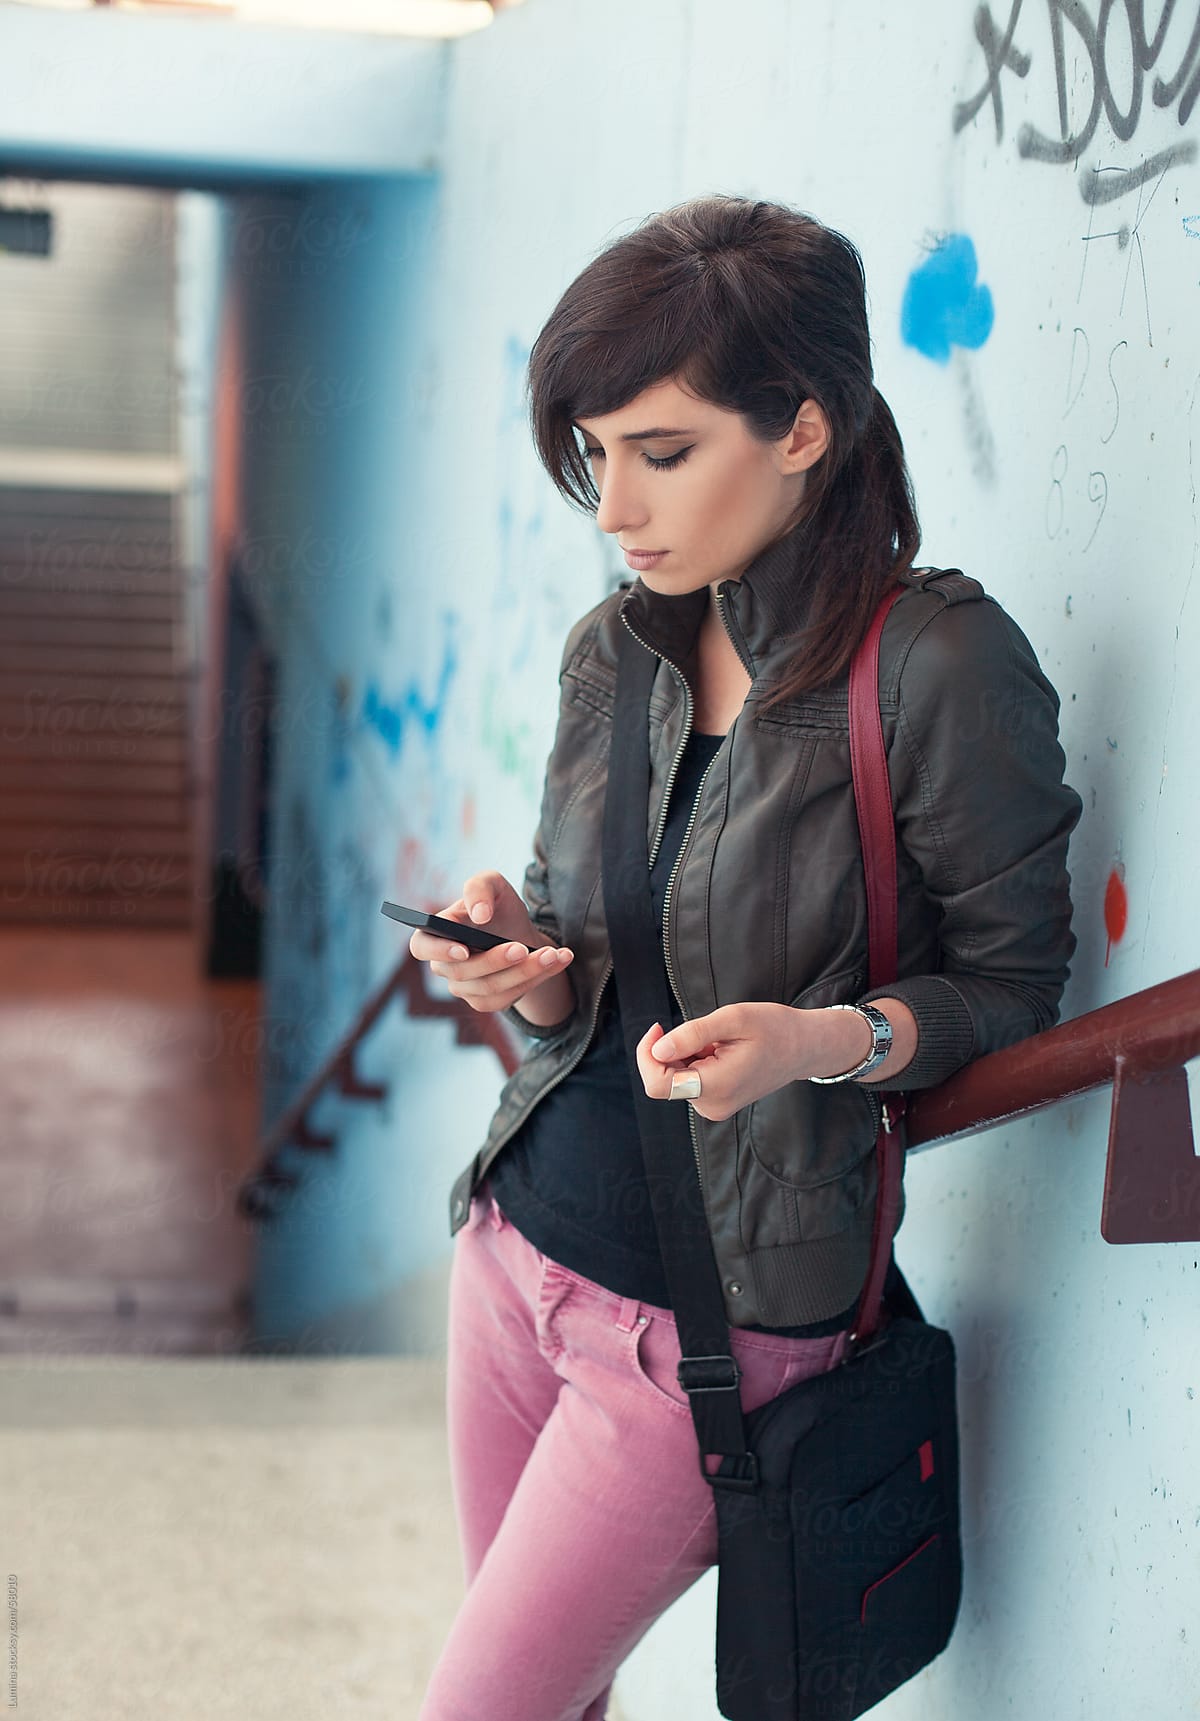 Woman Texting By A Graffiti Wall By Stocksy Contributor Lumina Stocksy